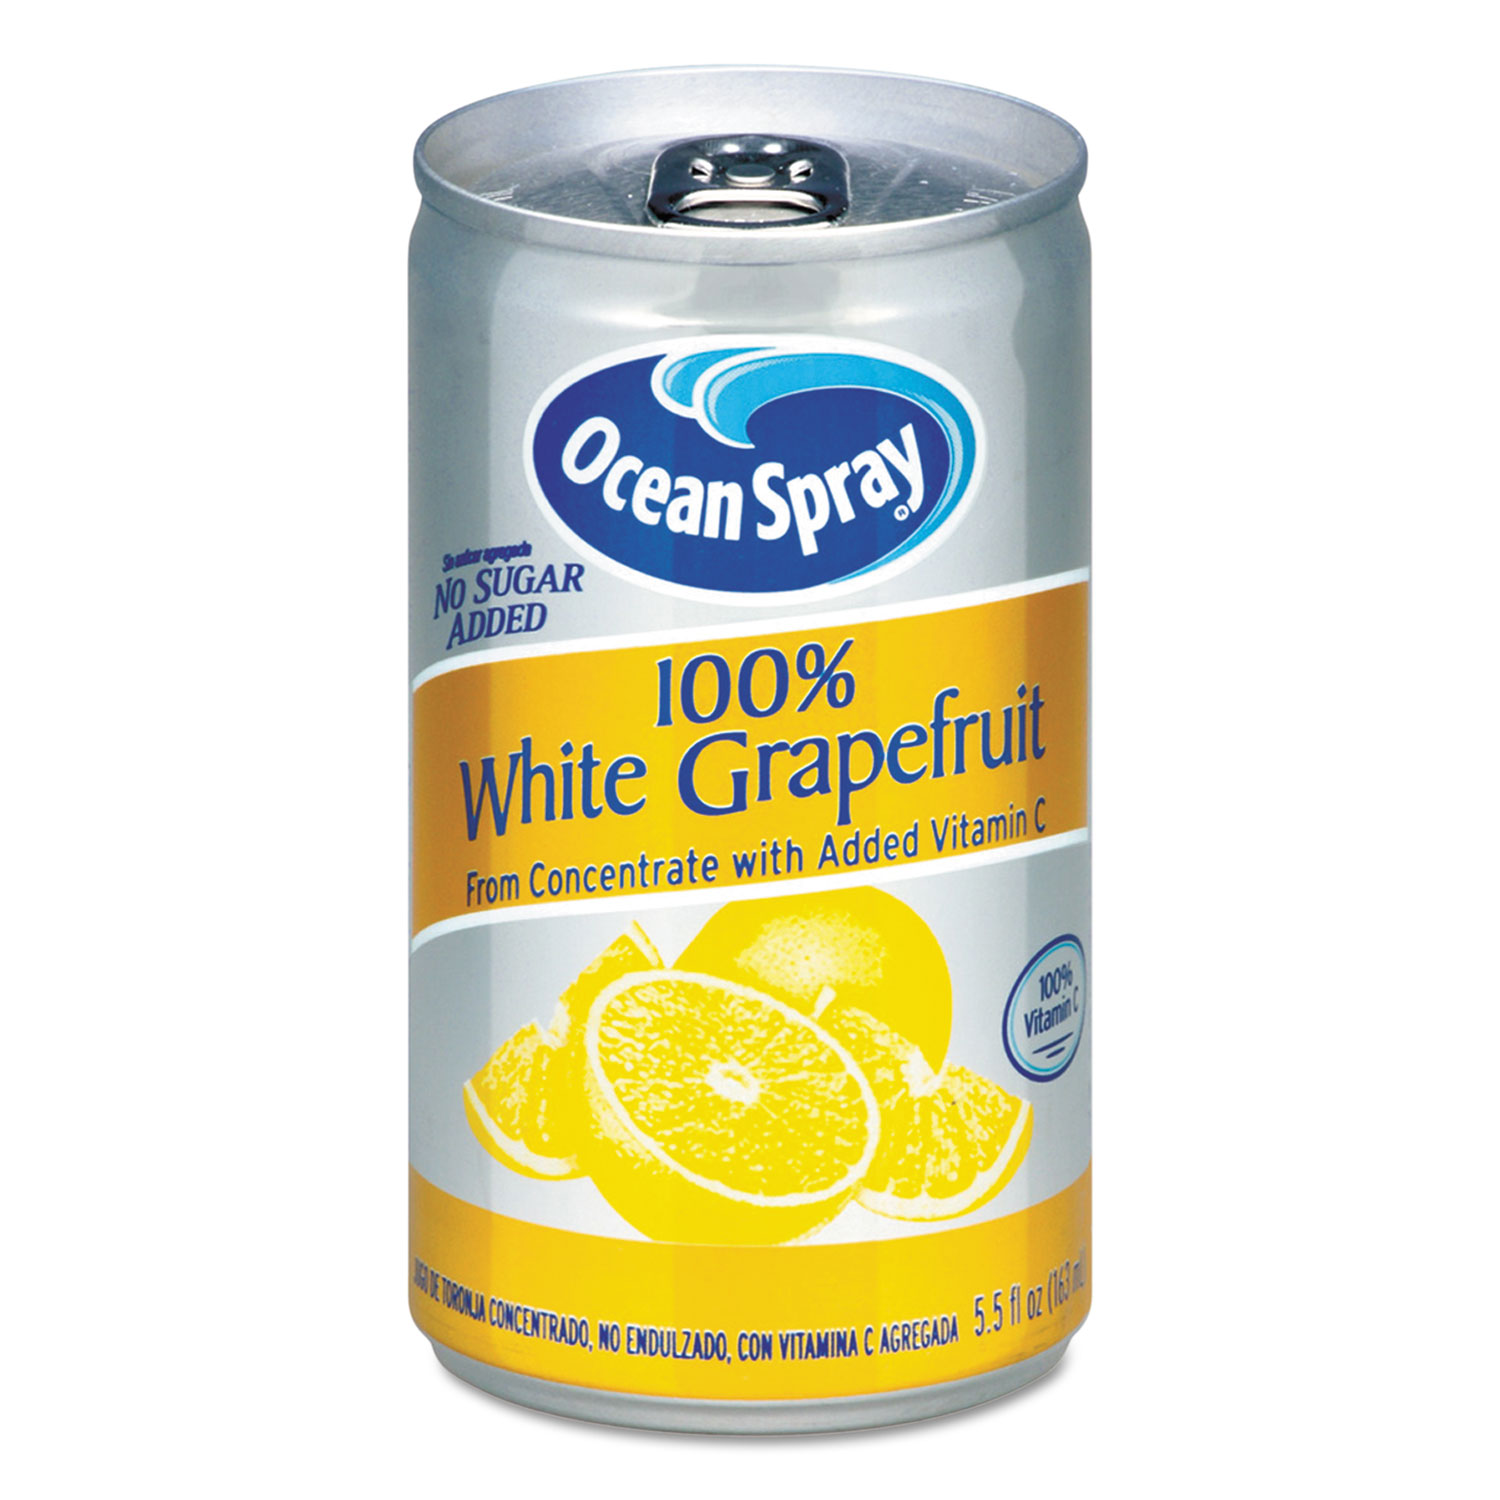  Ocean Spray OCE00866 100% Juice, White Grapefruit, 5 1/2 oz Can (OCS00866) 